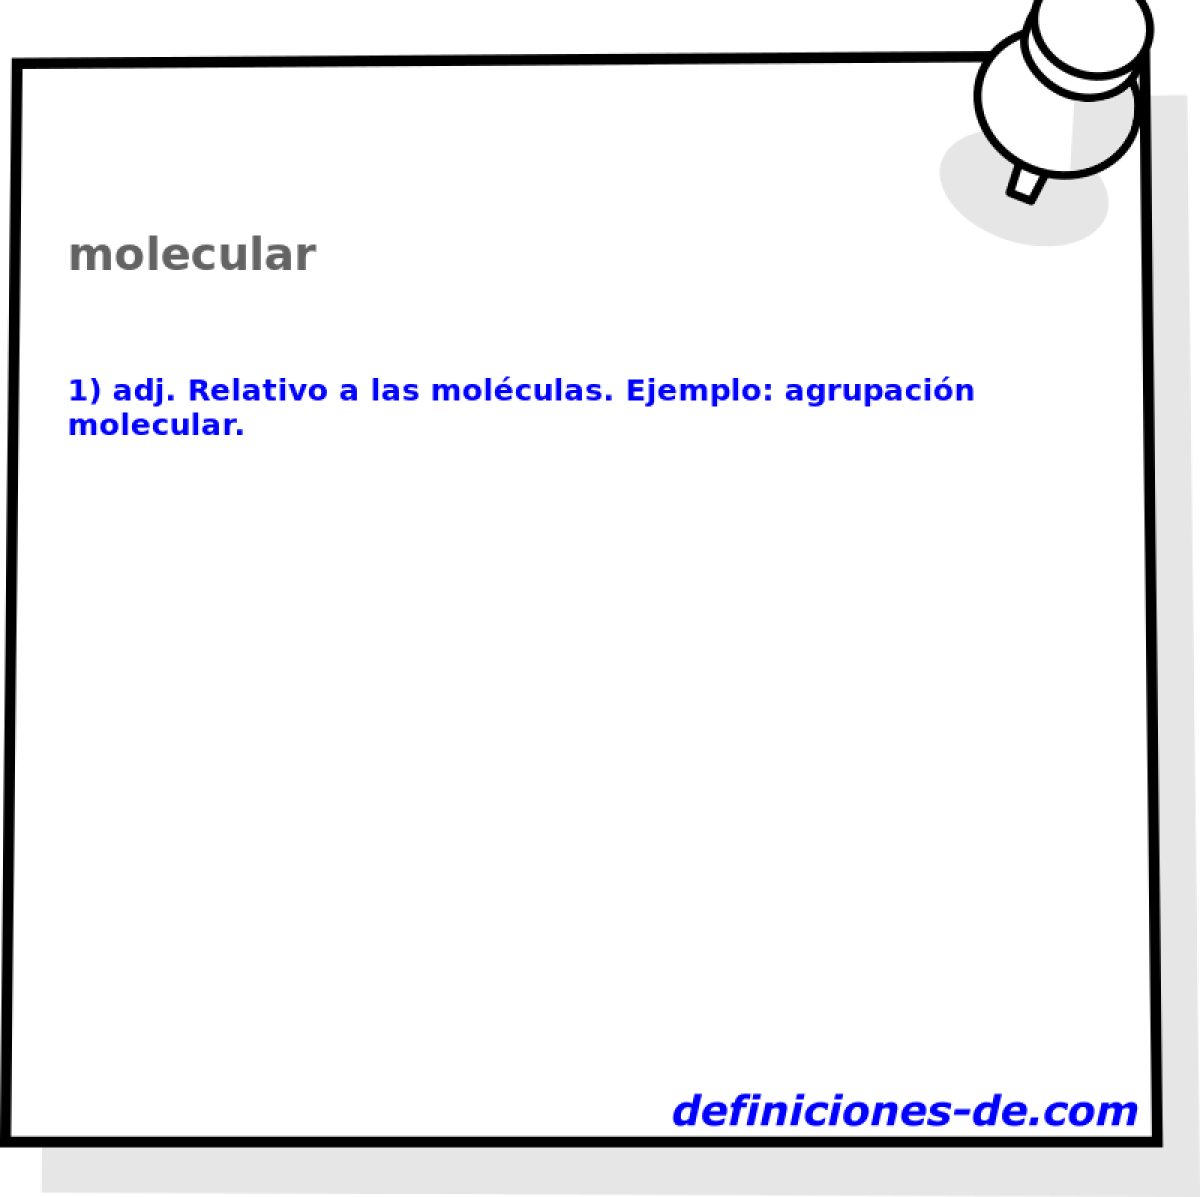 molecular 